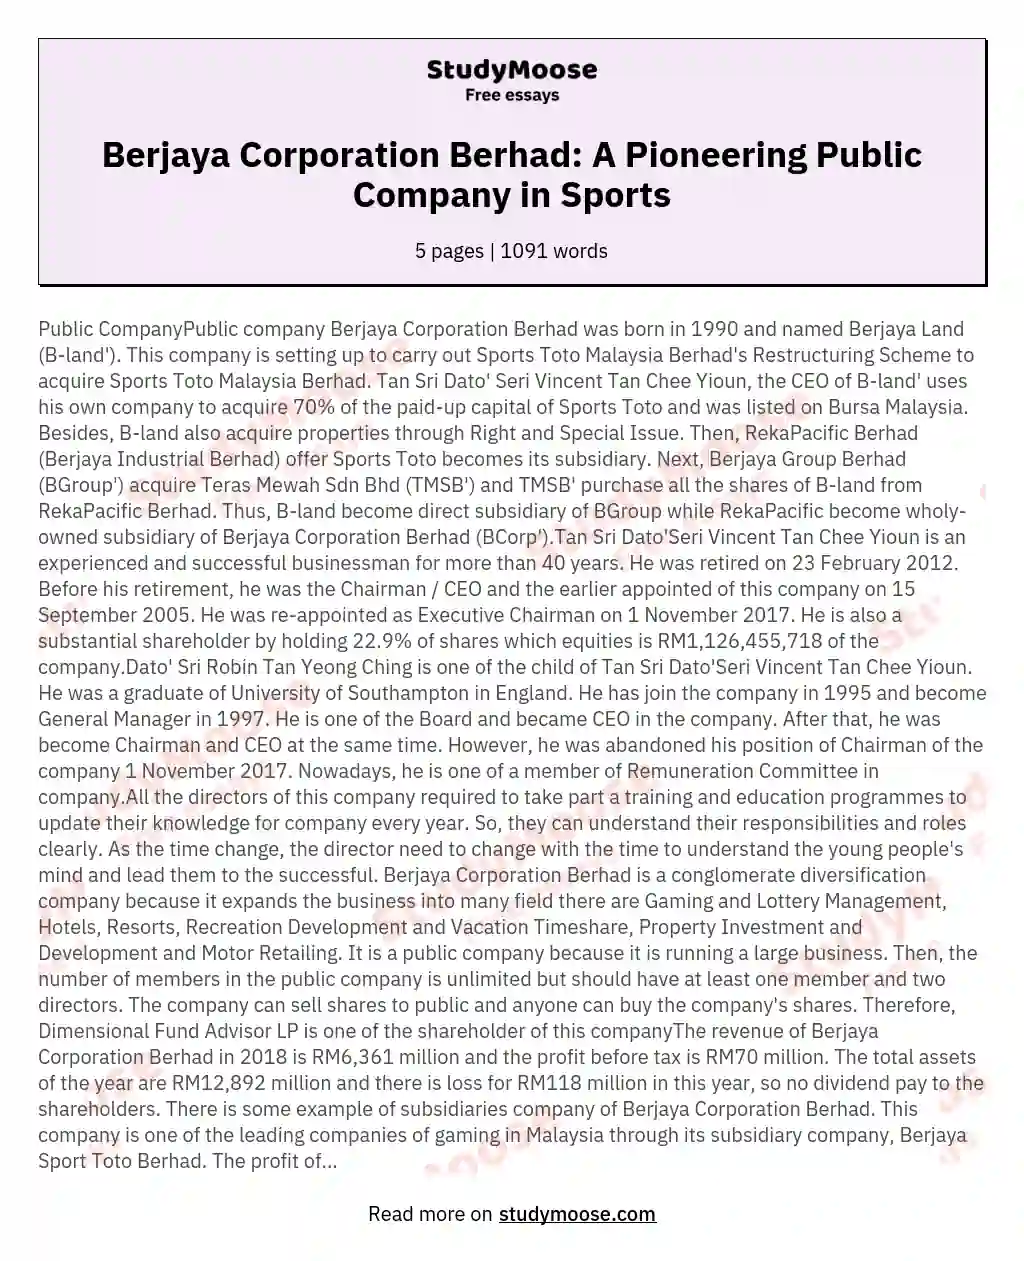 Berjaya Corporation Berhad: A Pioneering Public Company in Sports essay